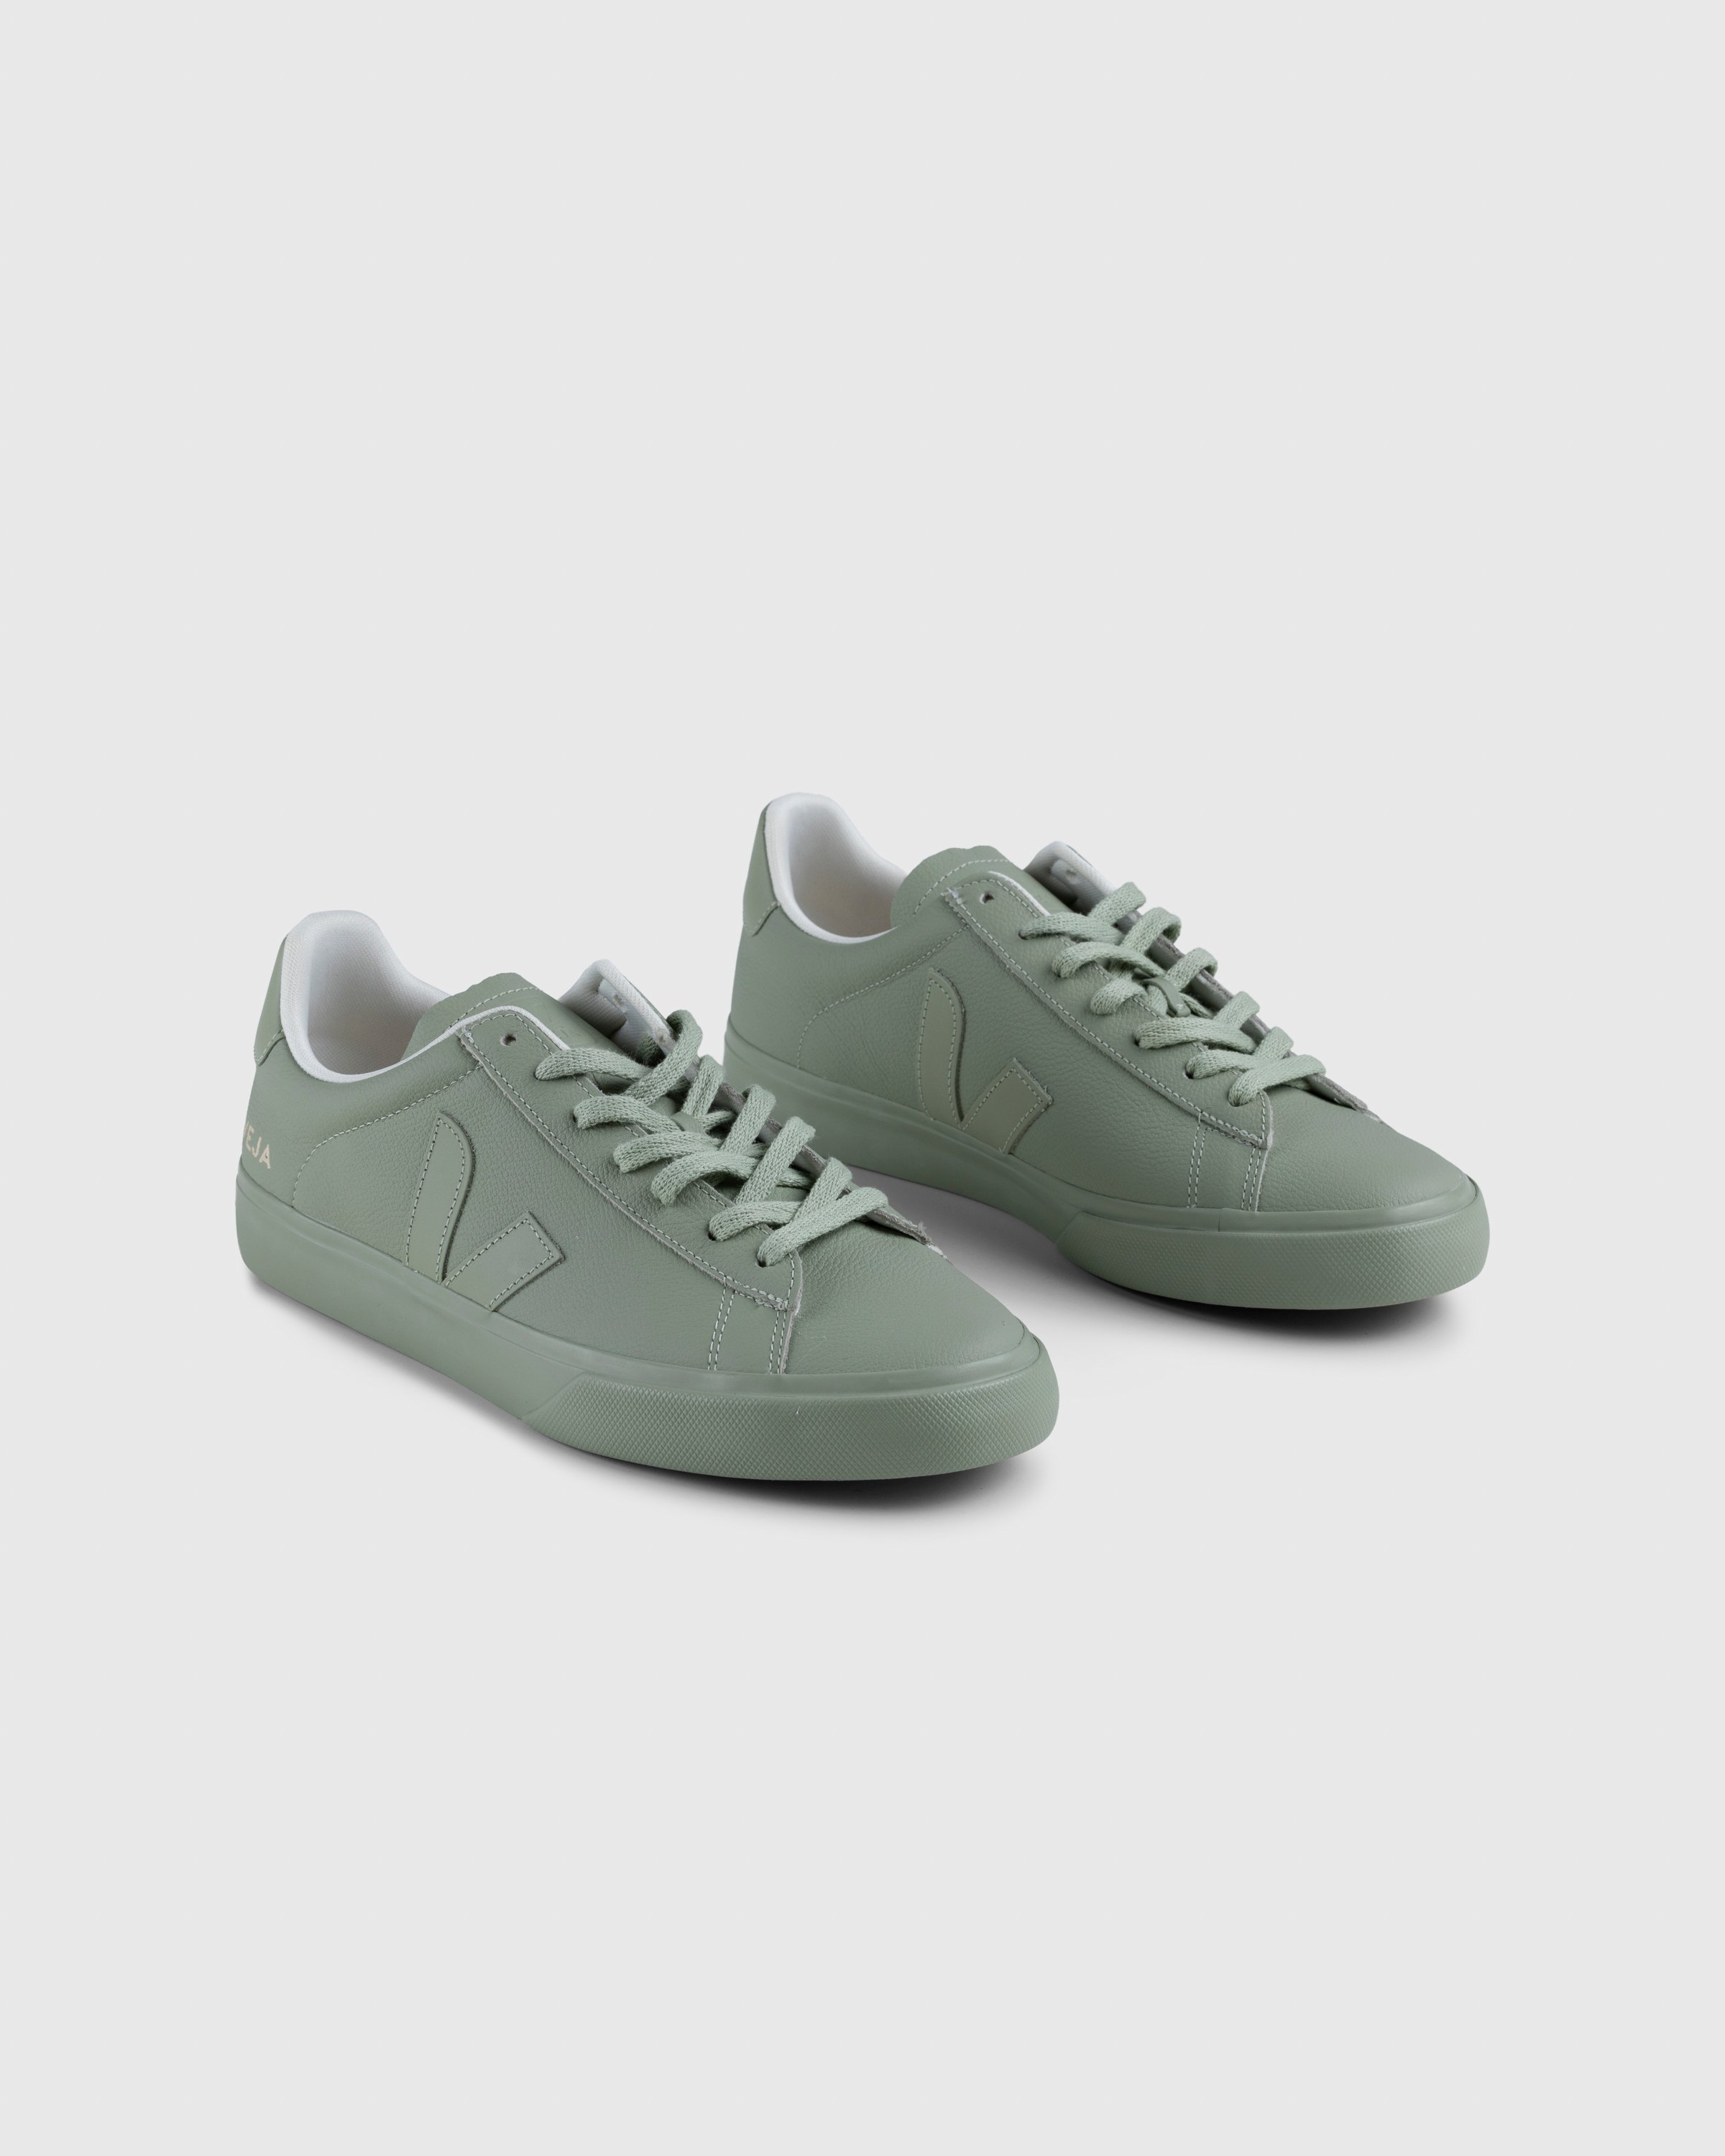 VEJA - Campo Green - Footwear - Green - Image 3